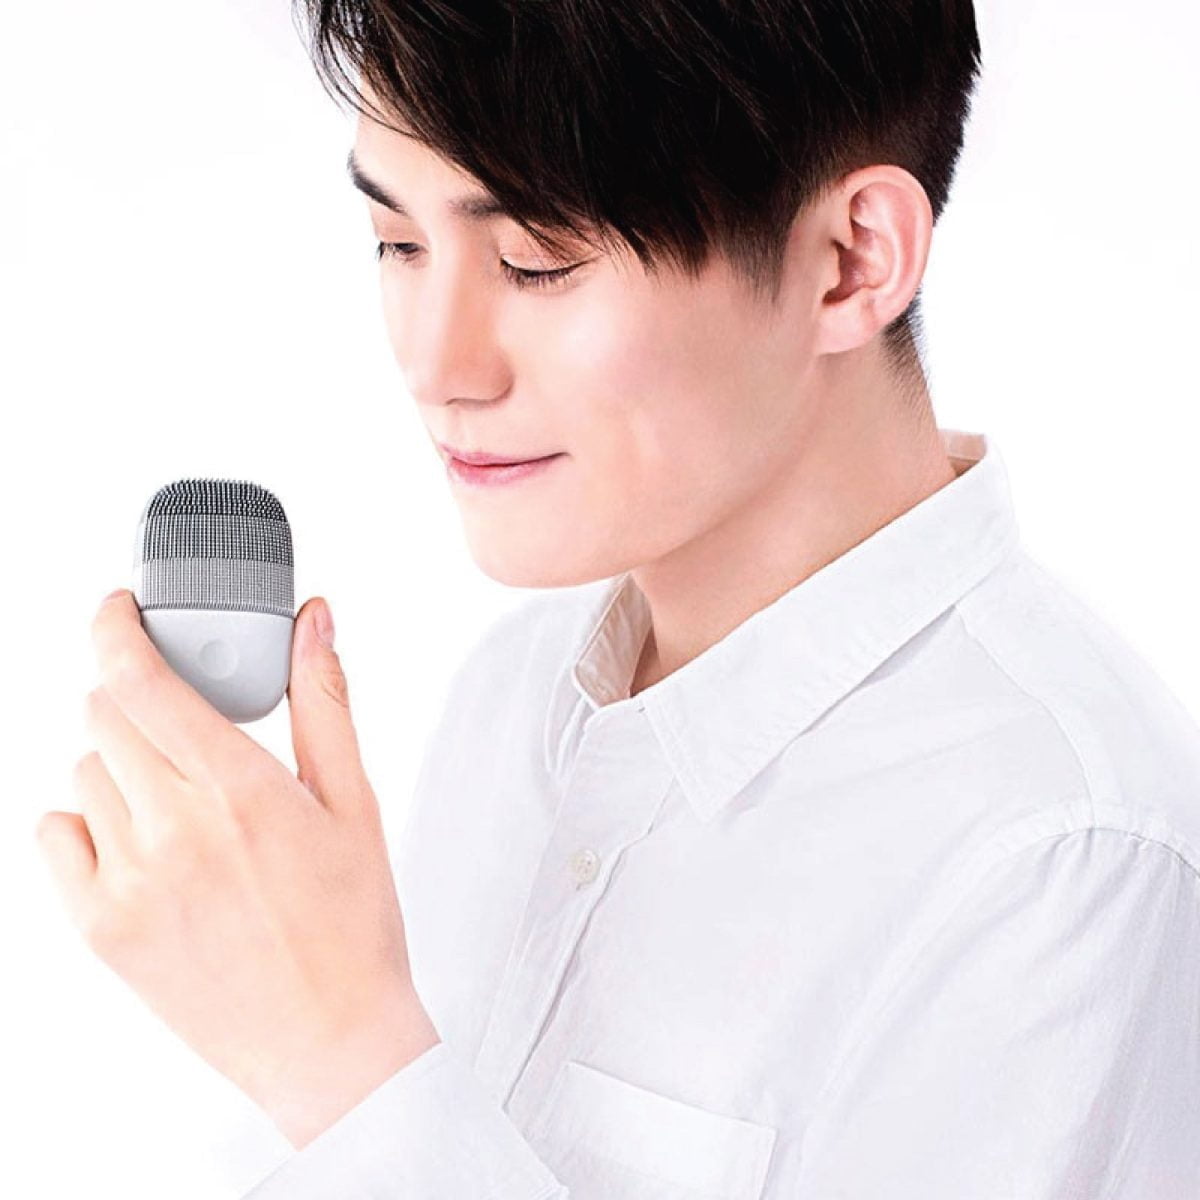 Wtf3 01 شاومي &Lt;Strong&Gt;تنظيف عميق للوجه - أوضاع 3 سرعات - 3 مناطق تنظيف - مصنوعة من السيليكون المضاد للحساسية - عمر بطارية طويل - تنظيف افتراضي في التسعينيات&Lt;/Strong&Gt; منظف الوجه الذكي Xiaomi Mijia Inface - وردي (جائزة التصميم لعام 2019)